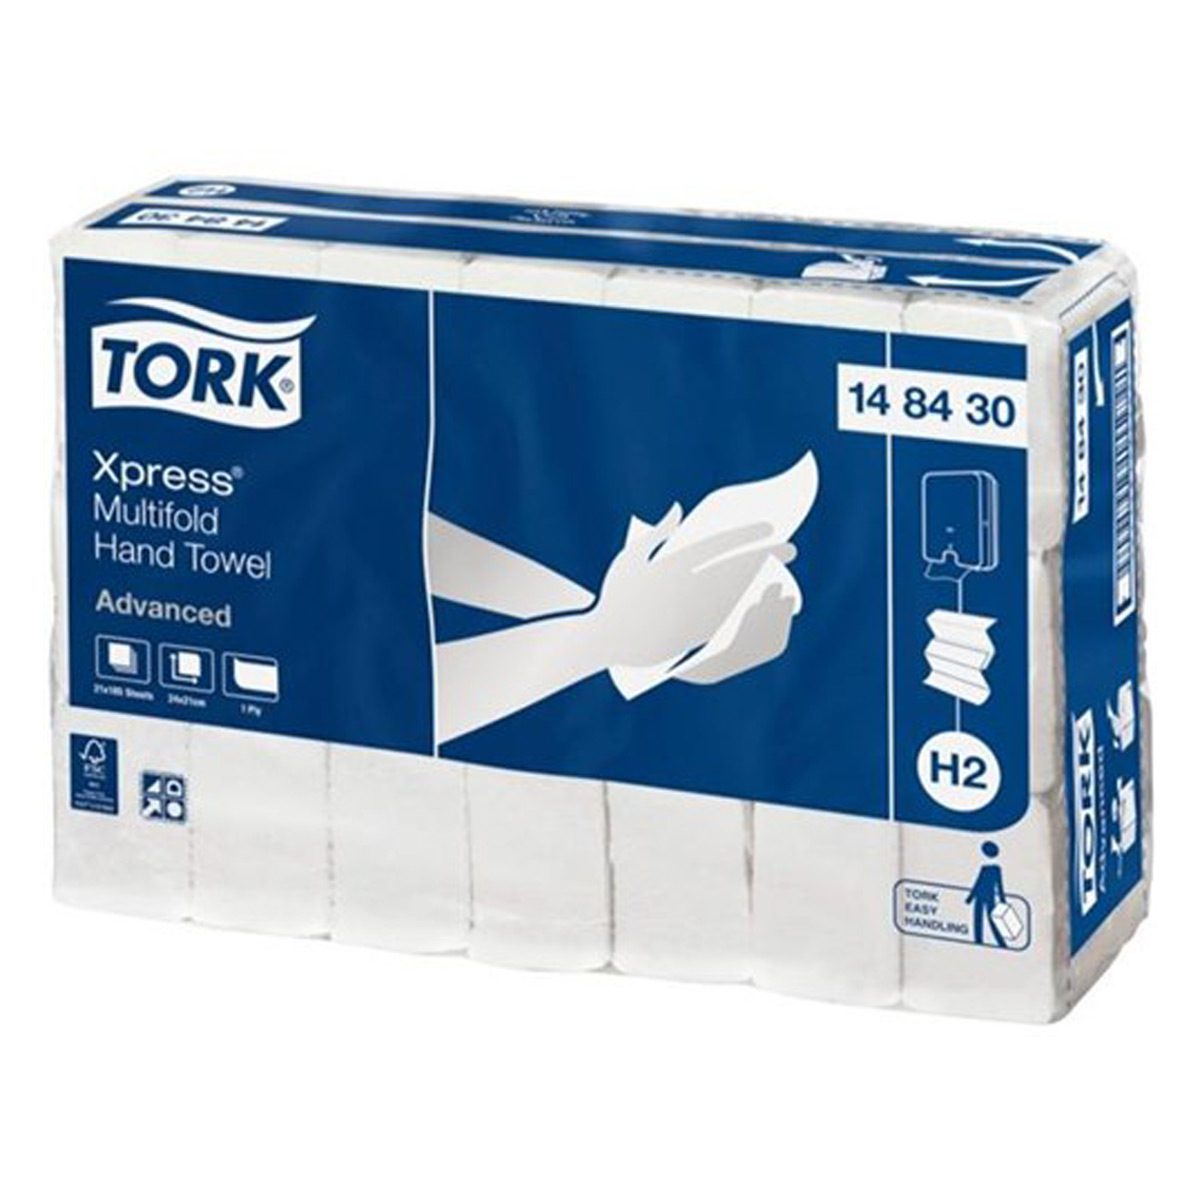 paper-products-paper-towels-super-tork-advance-xpress-slim-towel-1-ply-185-sheets-21-packs-consistent-high-quality-and-value-vjs-distributors-148430